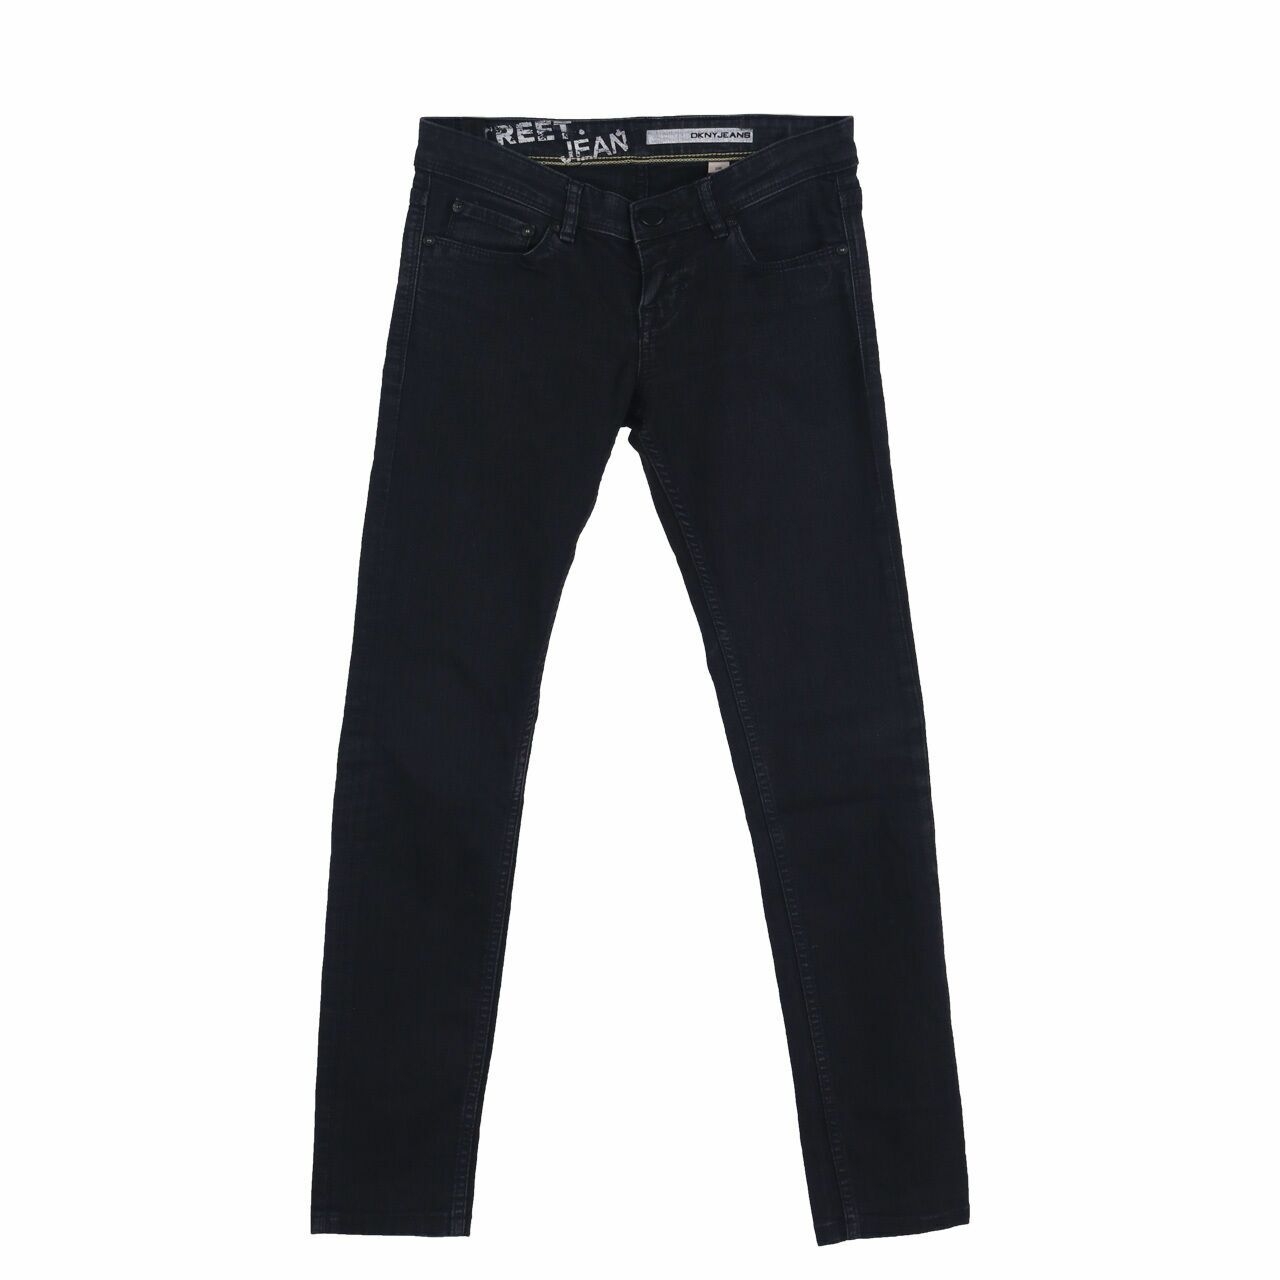 DKNY Jeans Black Celana Panjang